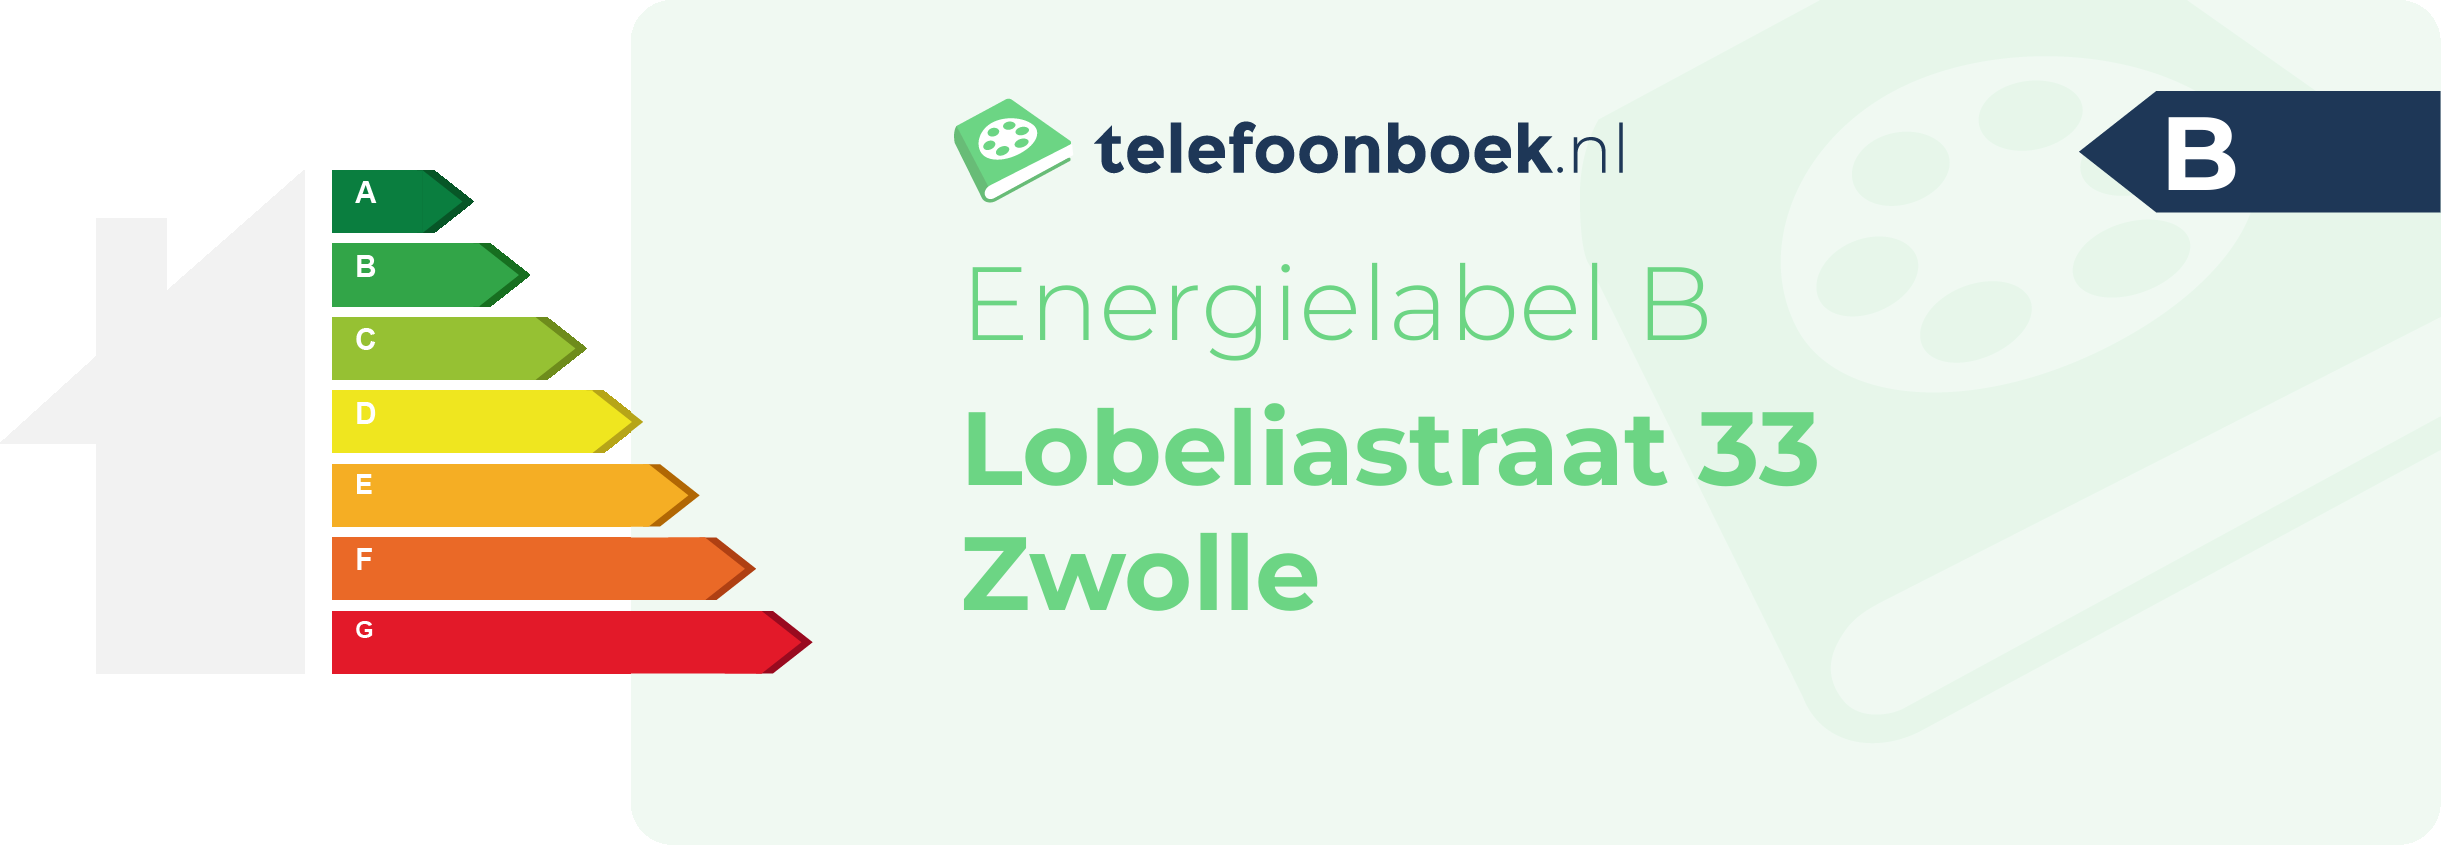 Energielabel Lobeliastraat 33 Zwolle